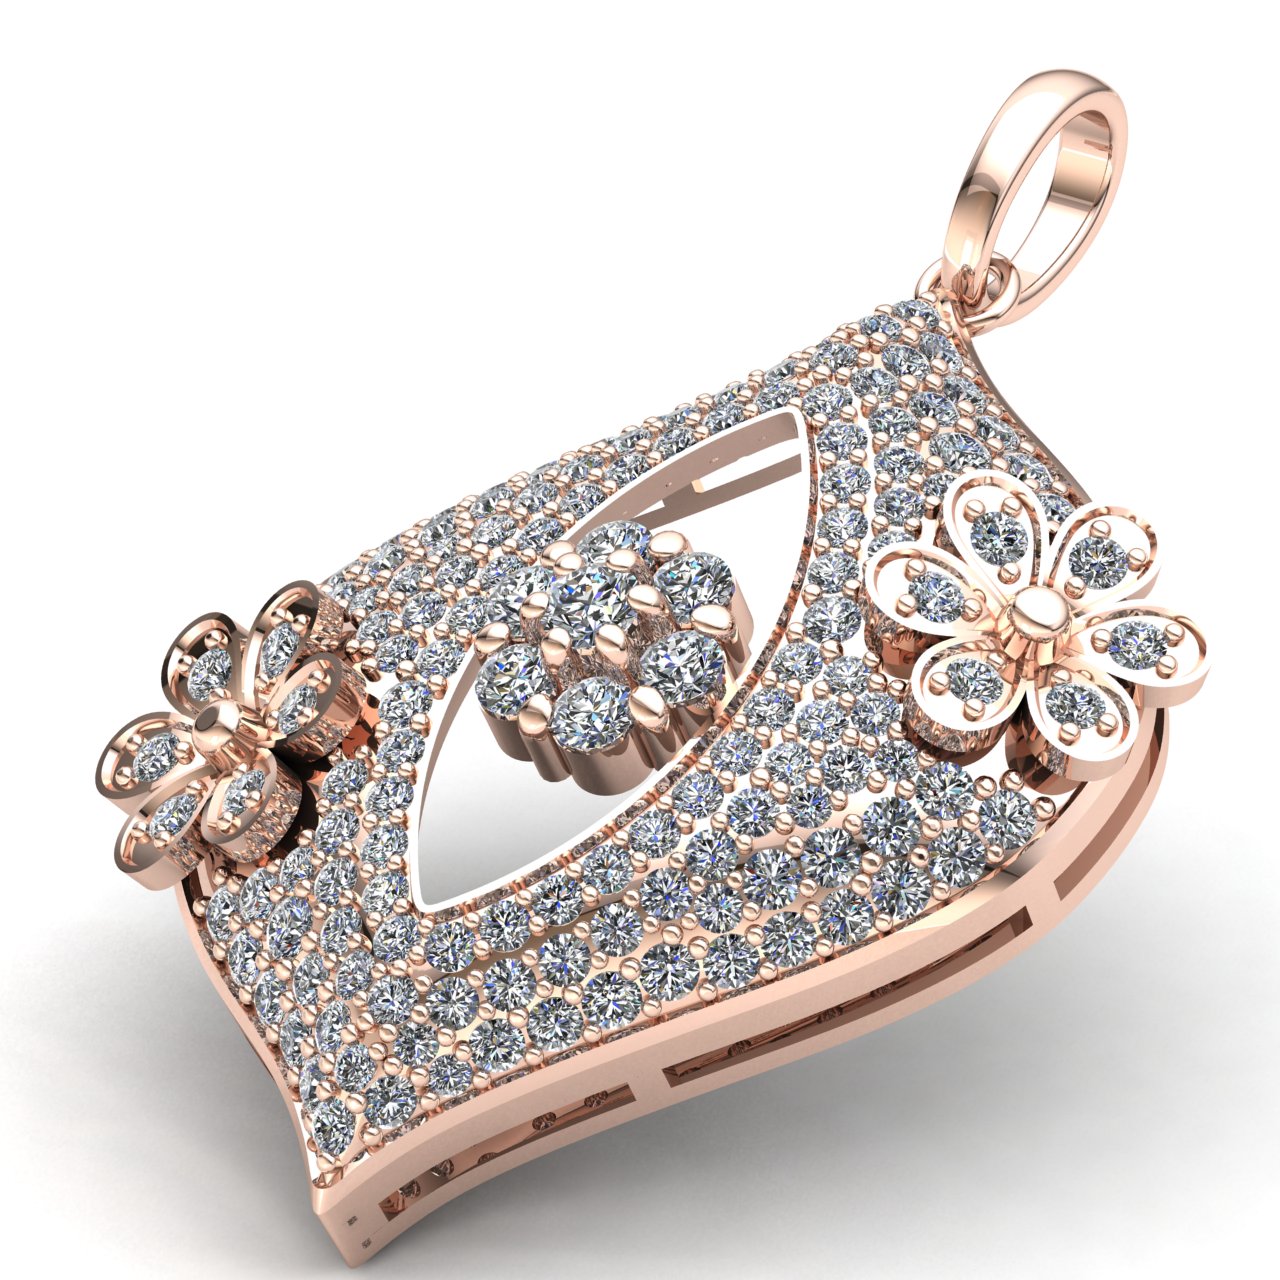 Jewel We Sell 4carat Round Cut Diamond Ladies Cluster Fancy Flower Pendant Solid 14K Rose Gold FG VS